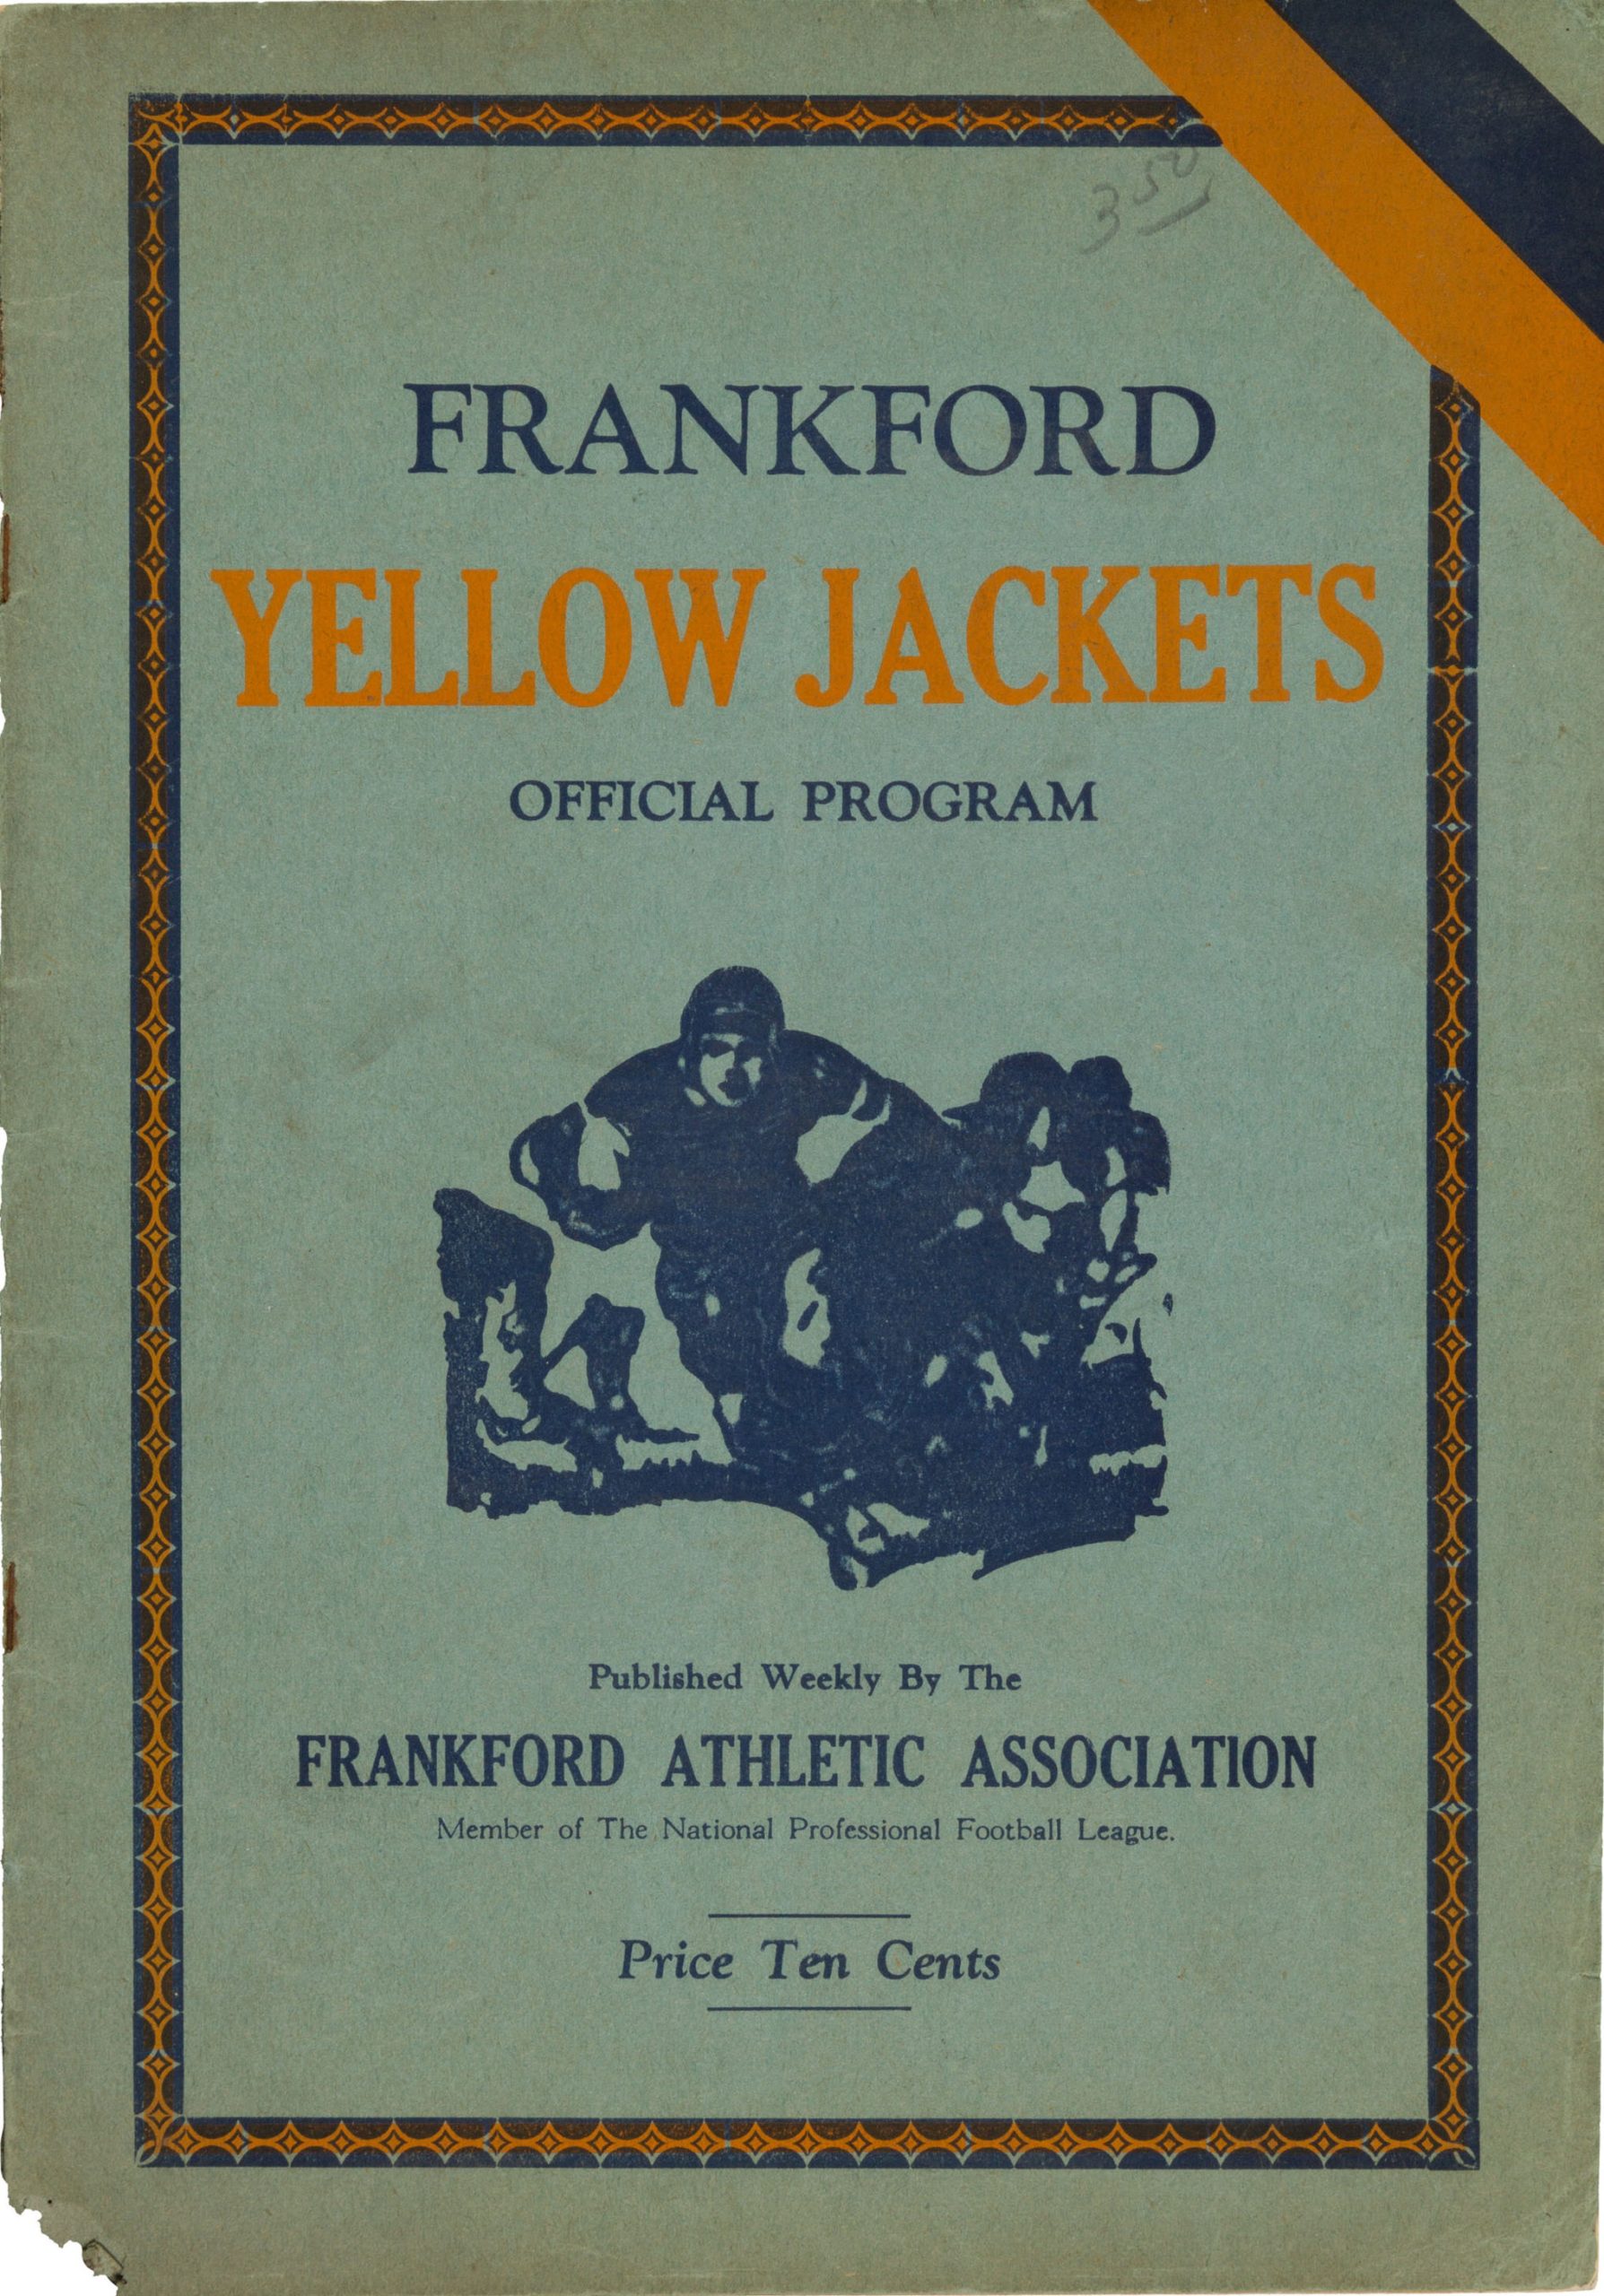 NFL Program: Frankford Yellow Jackets vs. Chicago Bears (December 5, 1925)